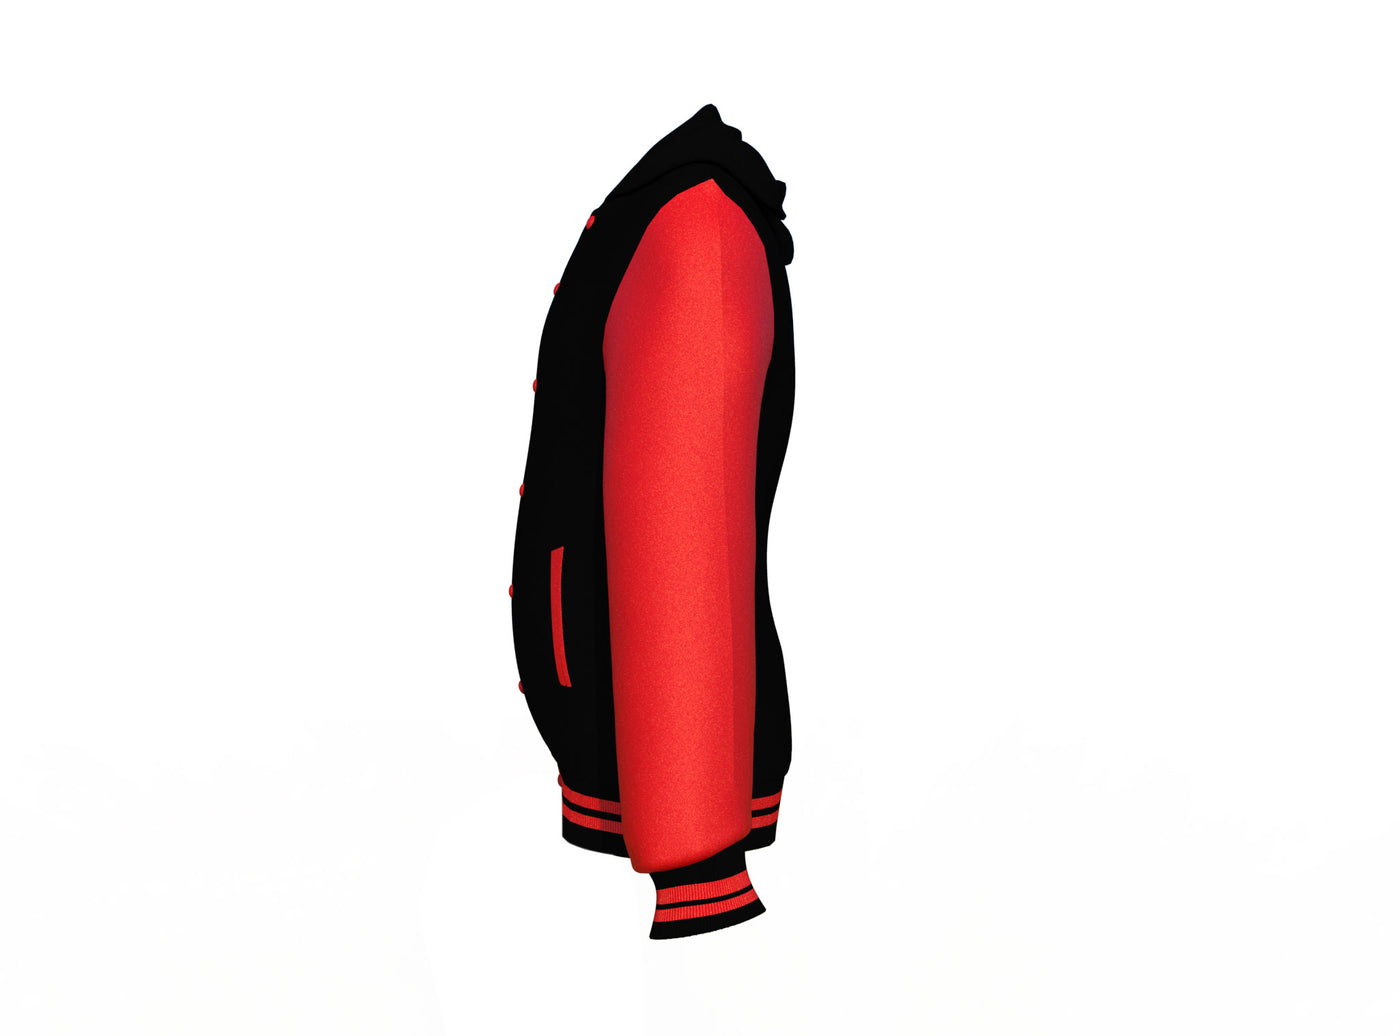 Lightweight Red Sleeves Black Varsity Letterman Jacket 